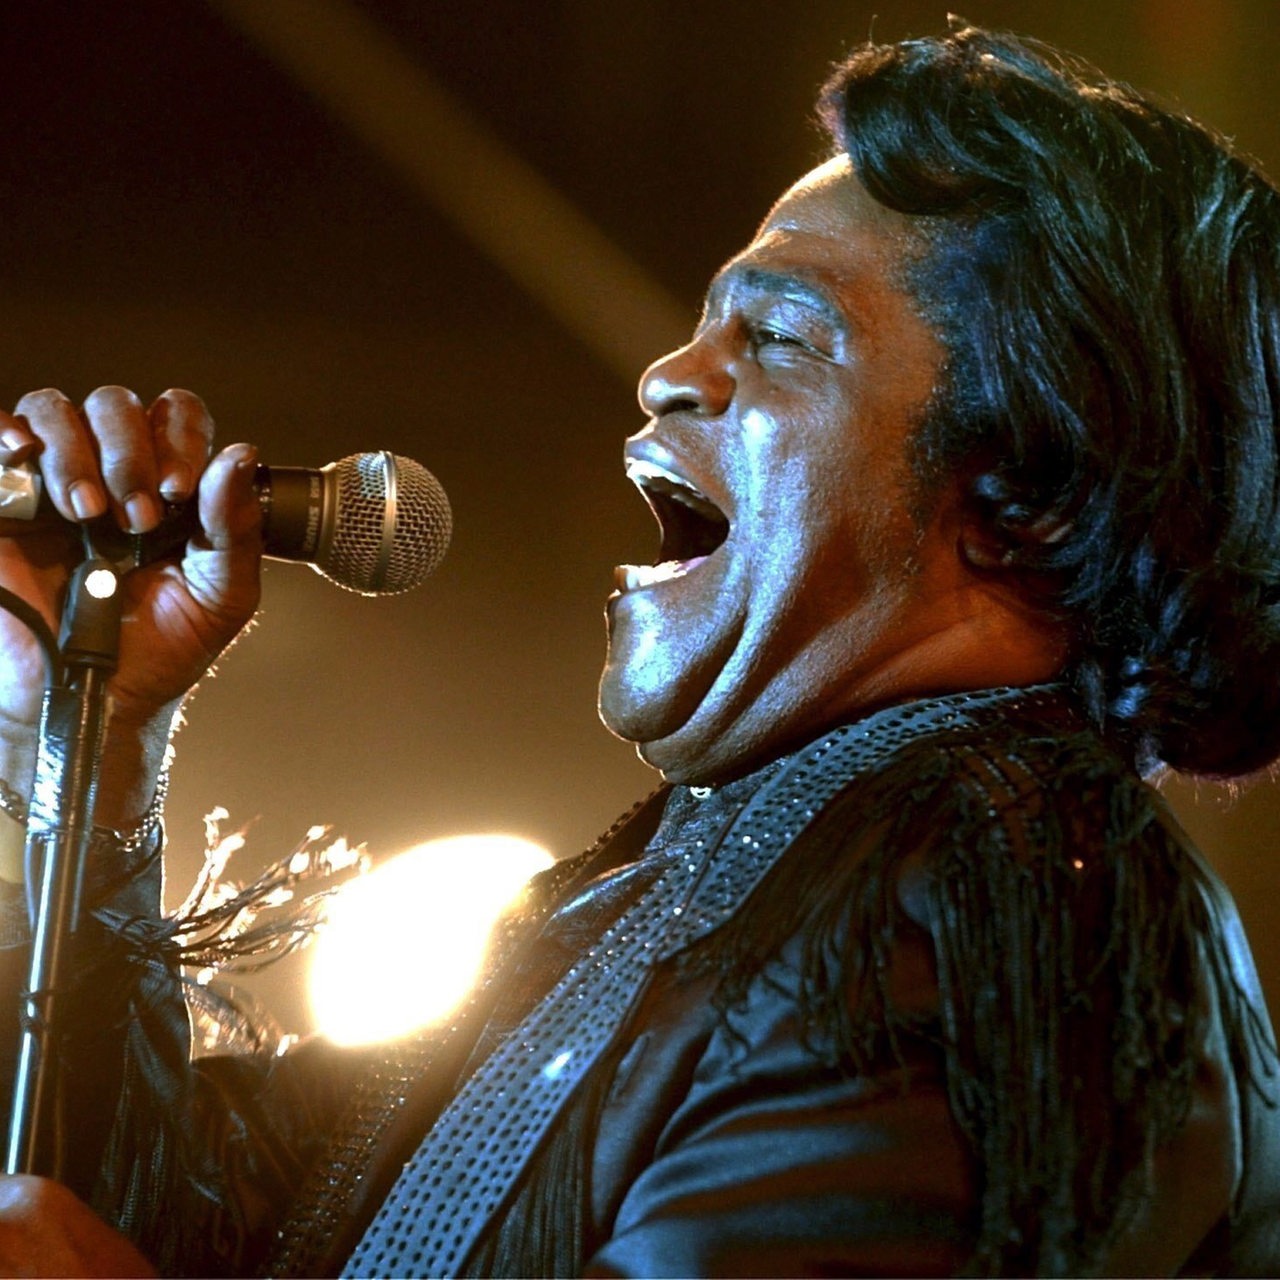 US Soul Legende James Brown singt ins Mikrofon 2002 in der Schweiz